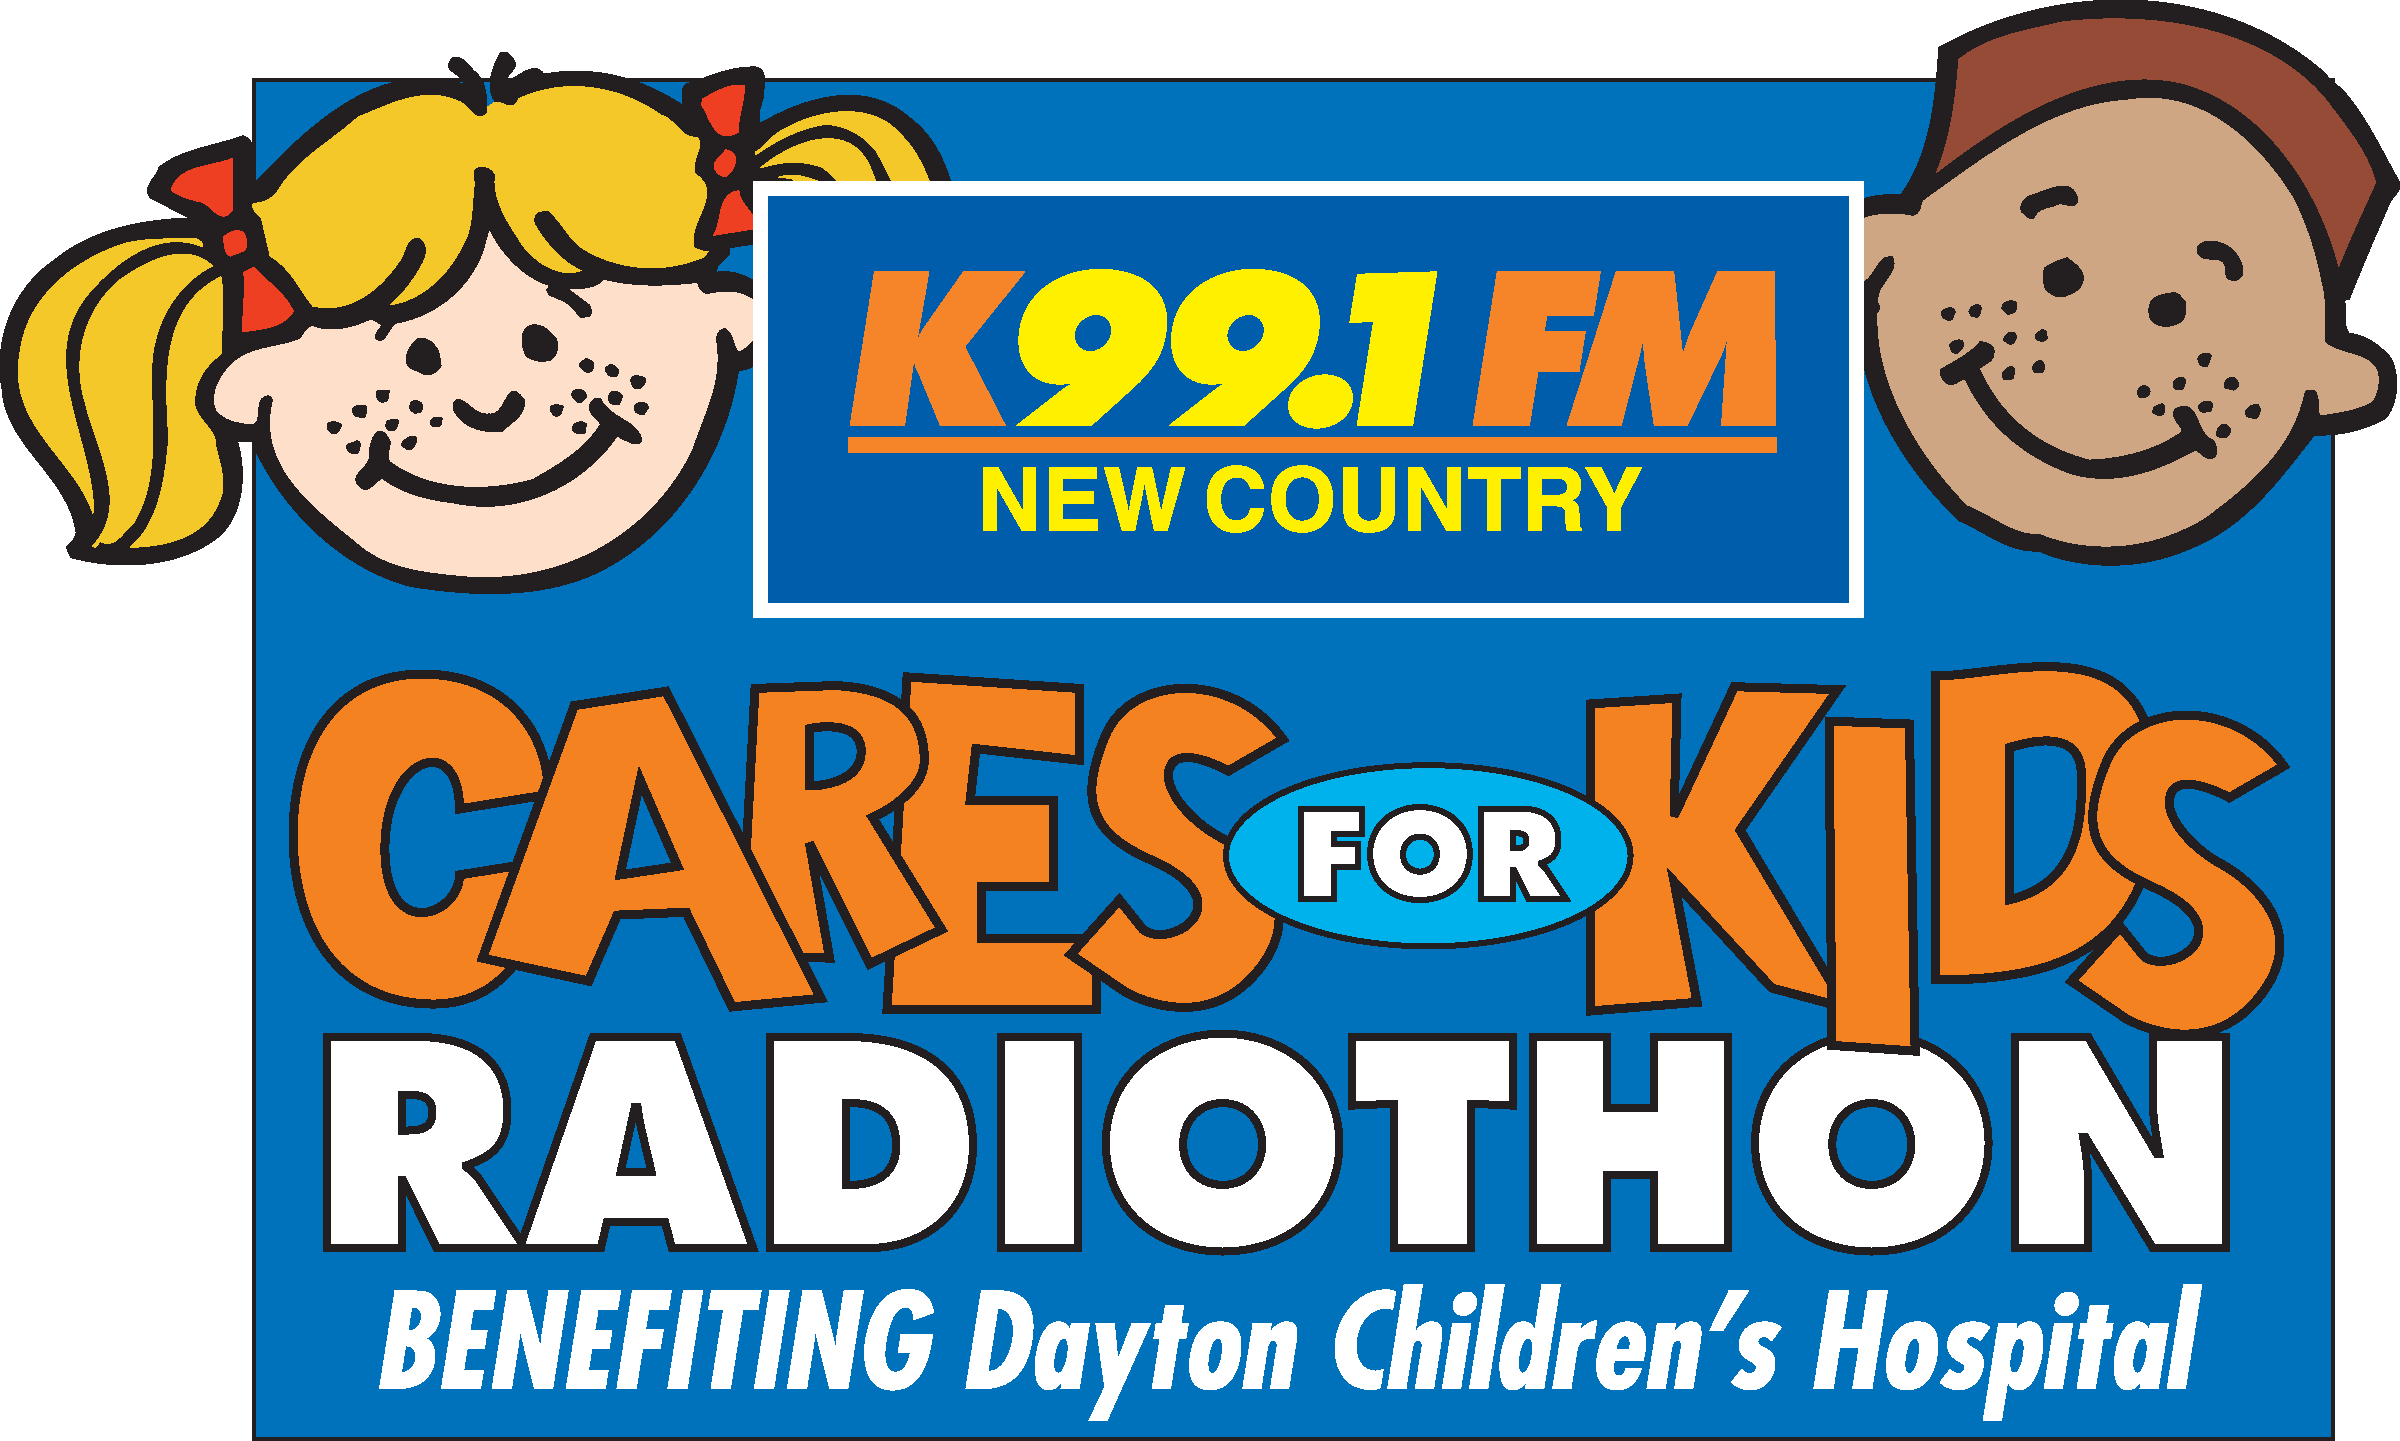 K99.1FM Cares for Kids Radiothon Logo